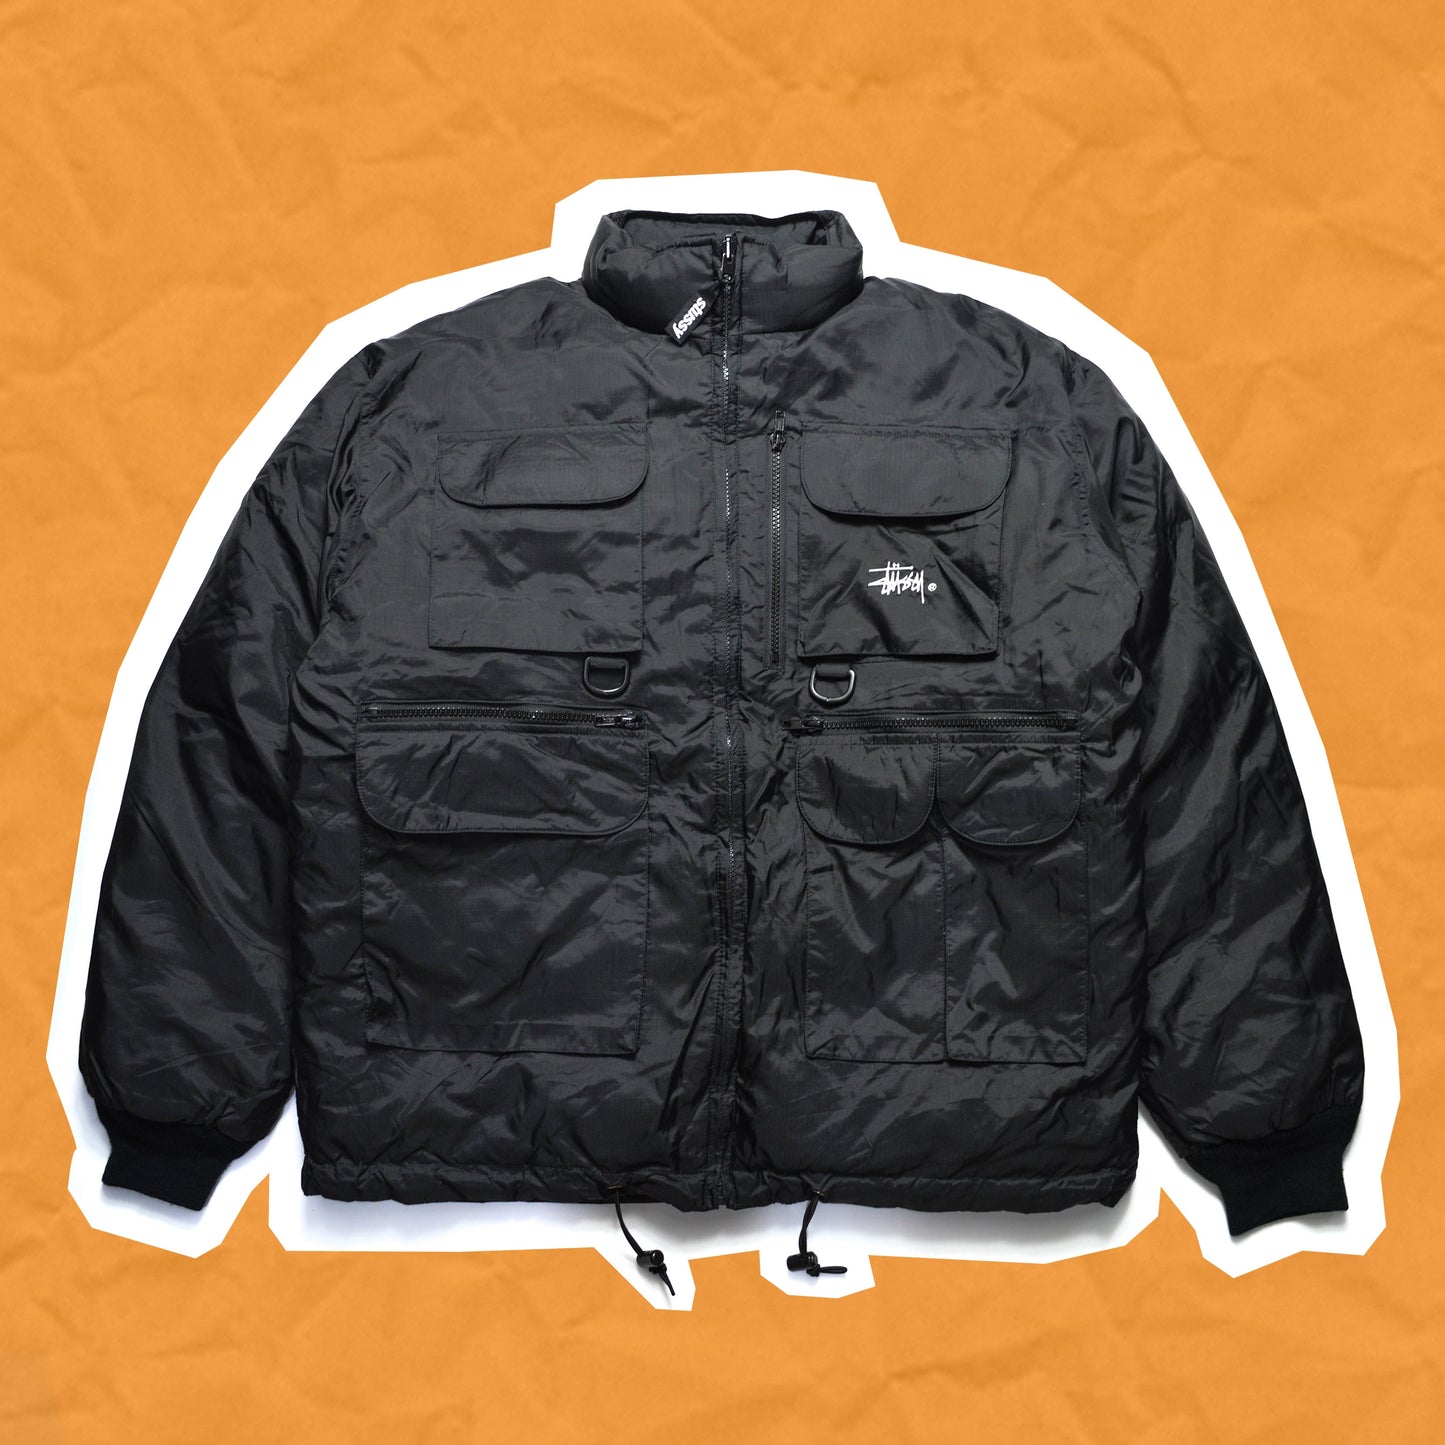 Stussy Sport Black Reversible Multi-pocket Jacket (M~L)